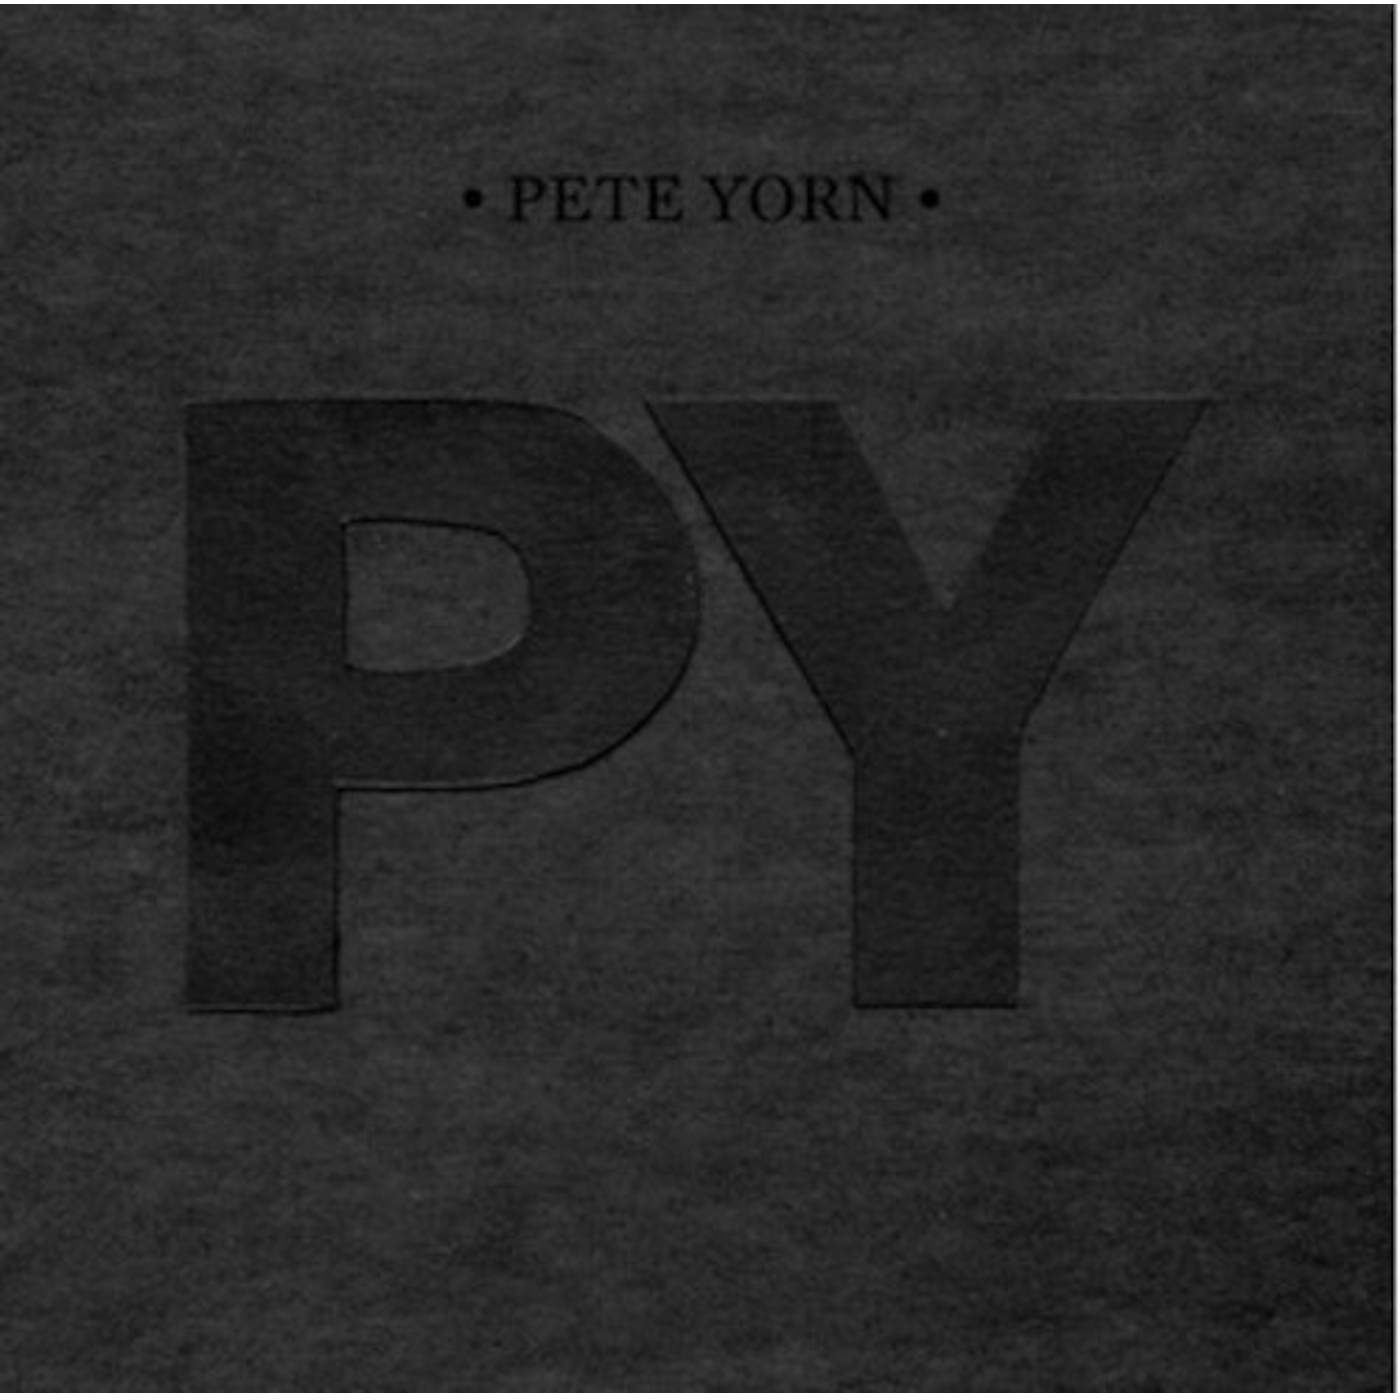 PETE YORN Vinyl Record